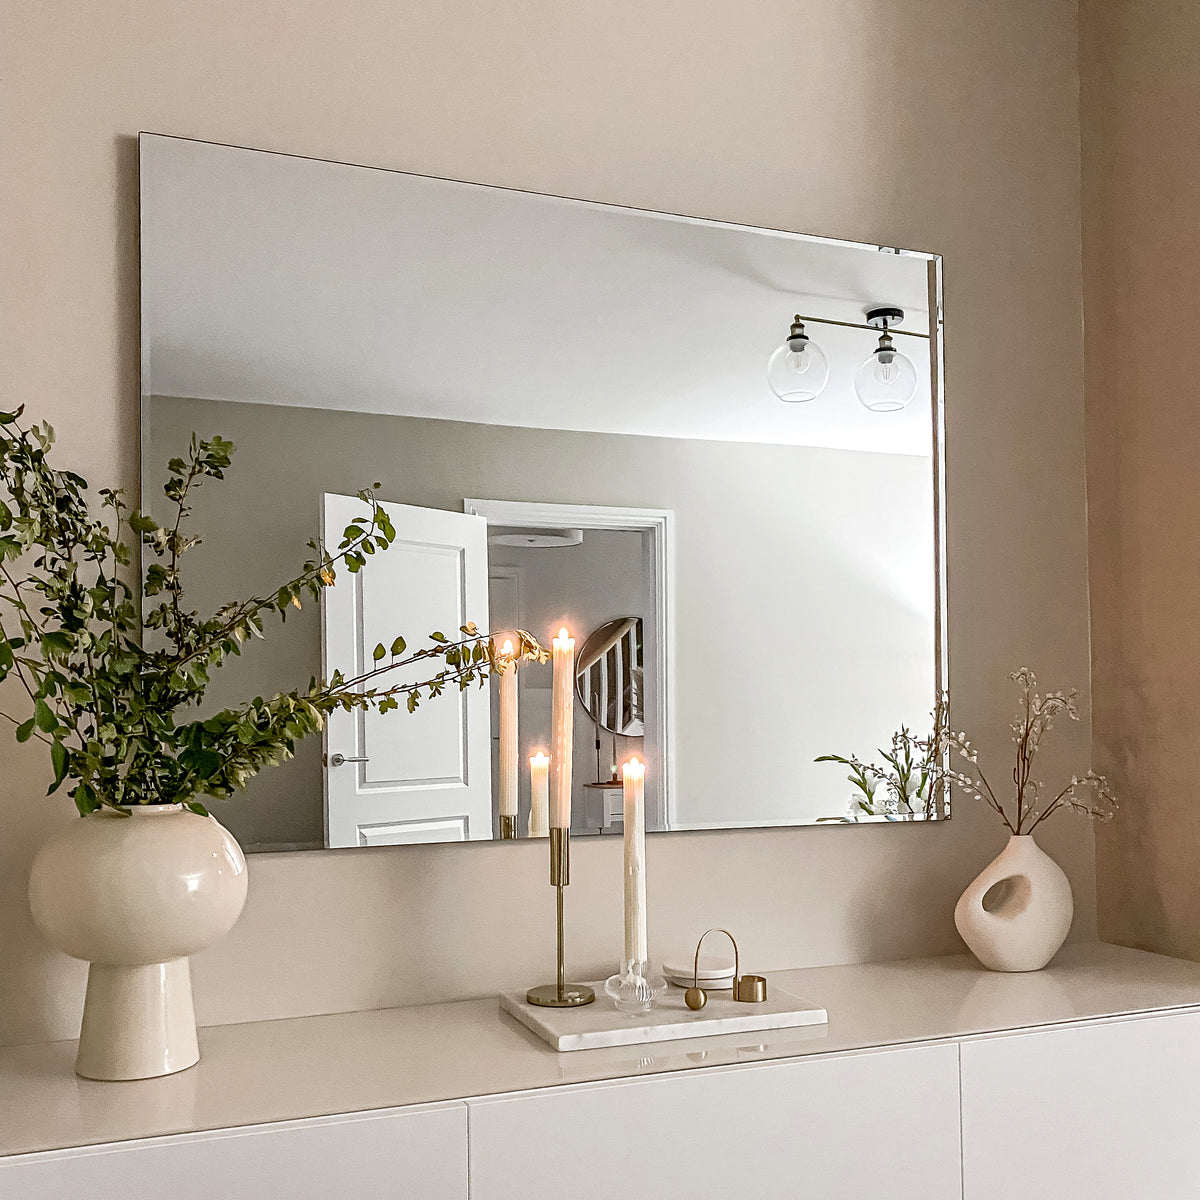 Large Frameless Rectangular Mirror above wall cupboard